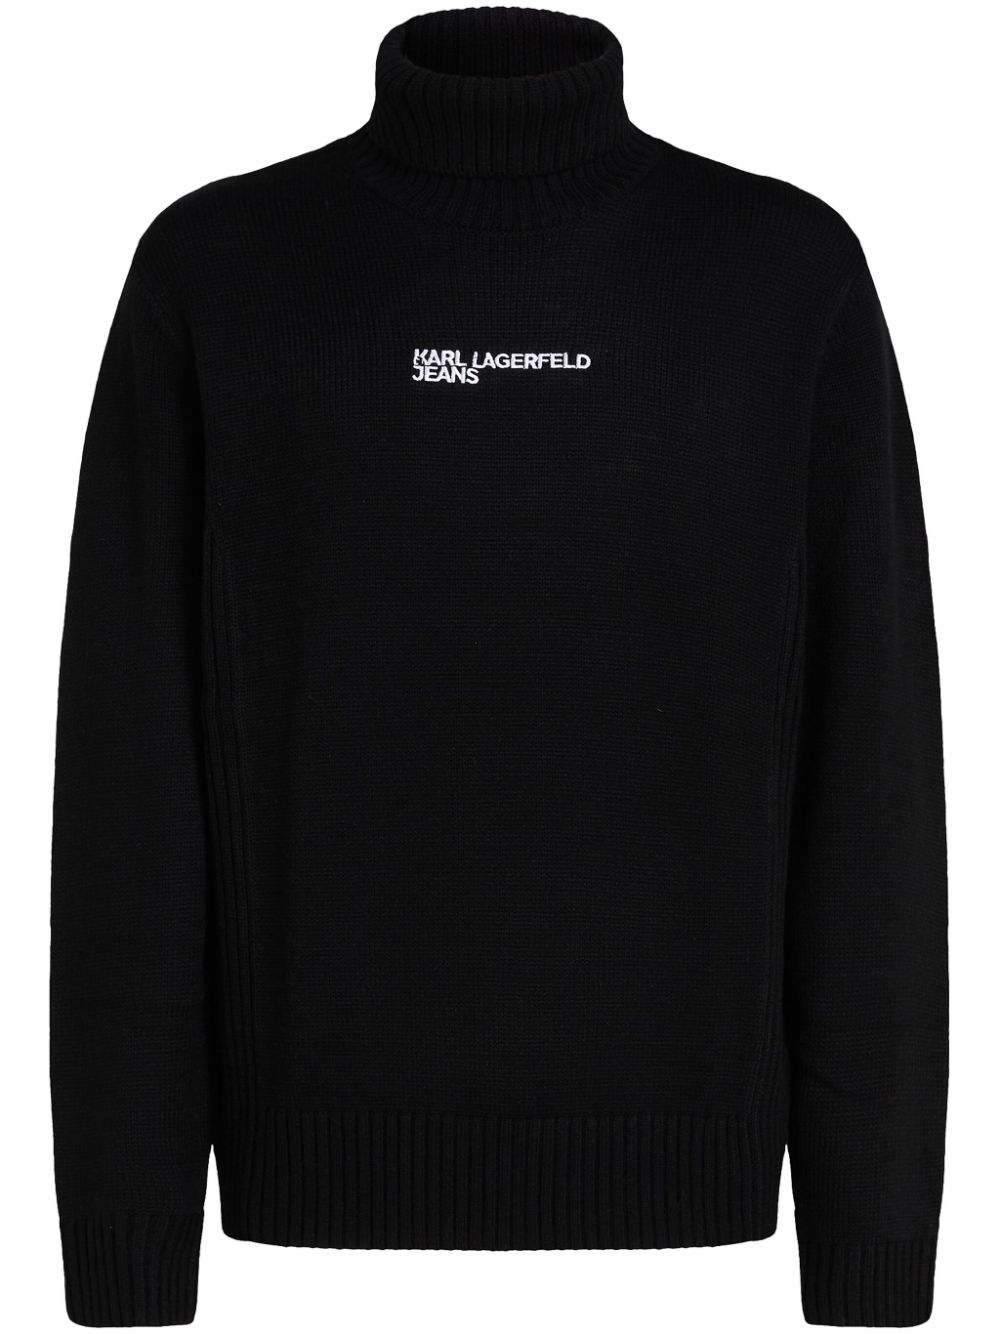 Karl Lagerfeld Jeans Logo sweater - Black von Karl Lagerfeld Jeans